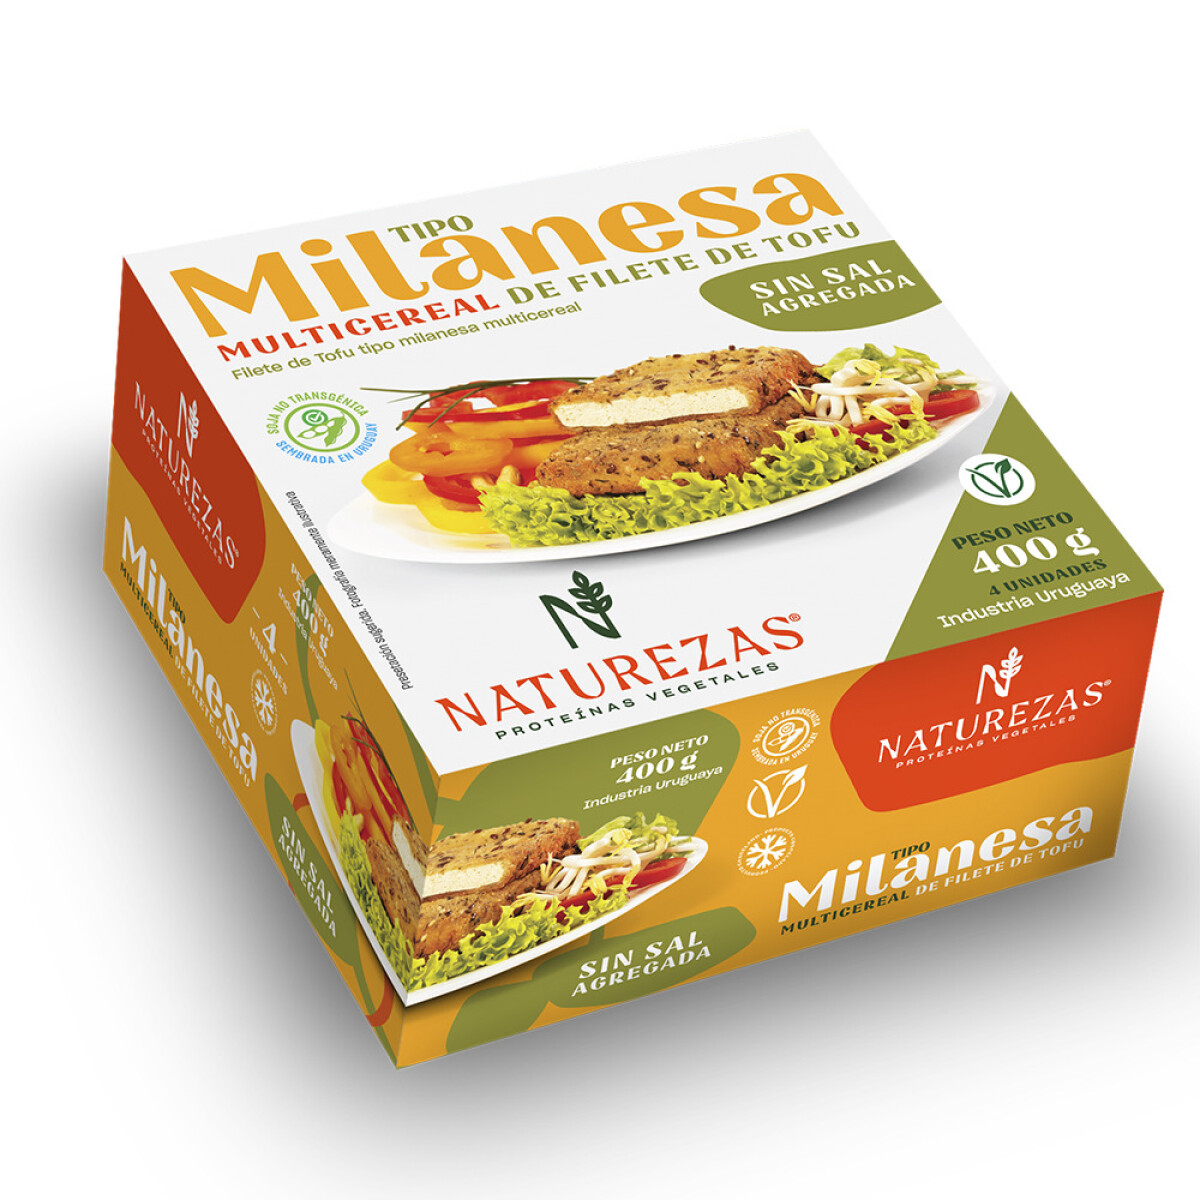 Milanesa multicereal tofu sin sal Naturezas - 4 uds. - 400 gr 